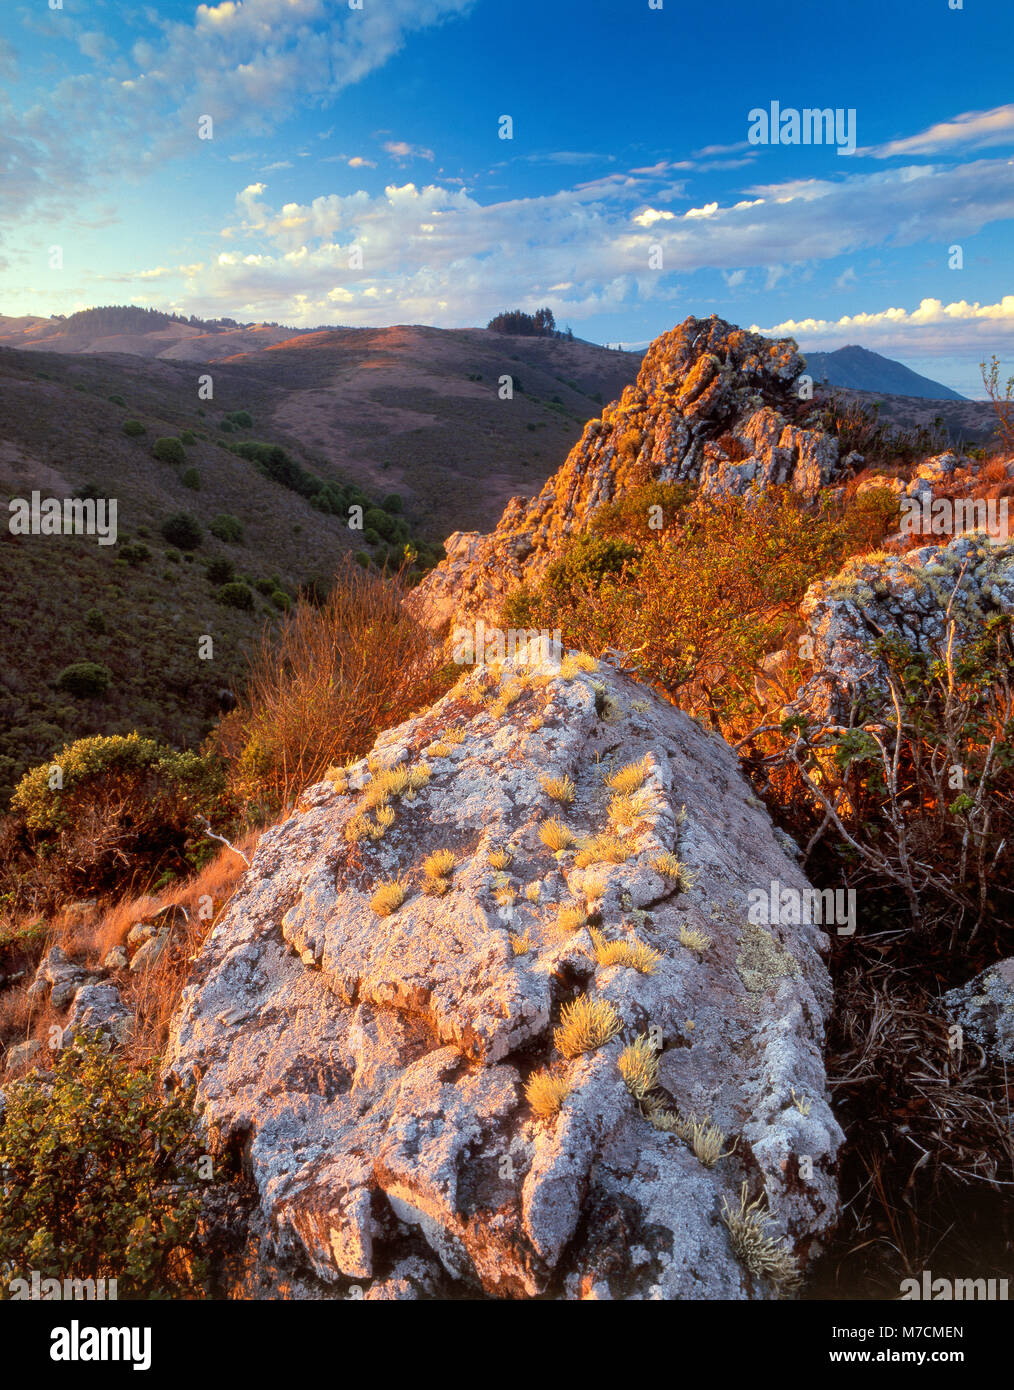 Rock Formations, Coastal Hills, Mount Tamalpais, Mount Tamalpais State Park, Golden Gate National Recreation Area, Marin County, California Stock Photo